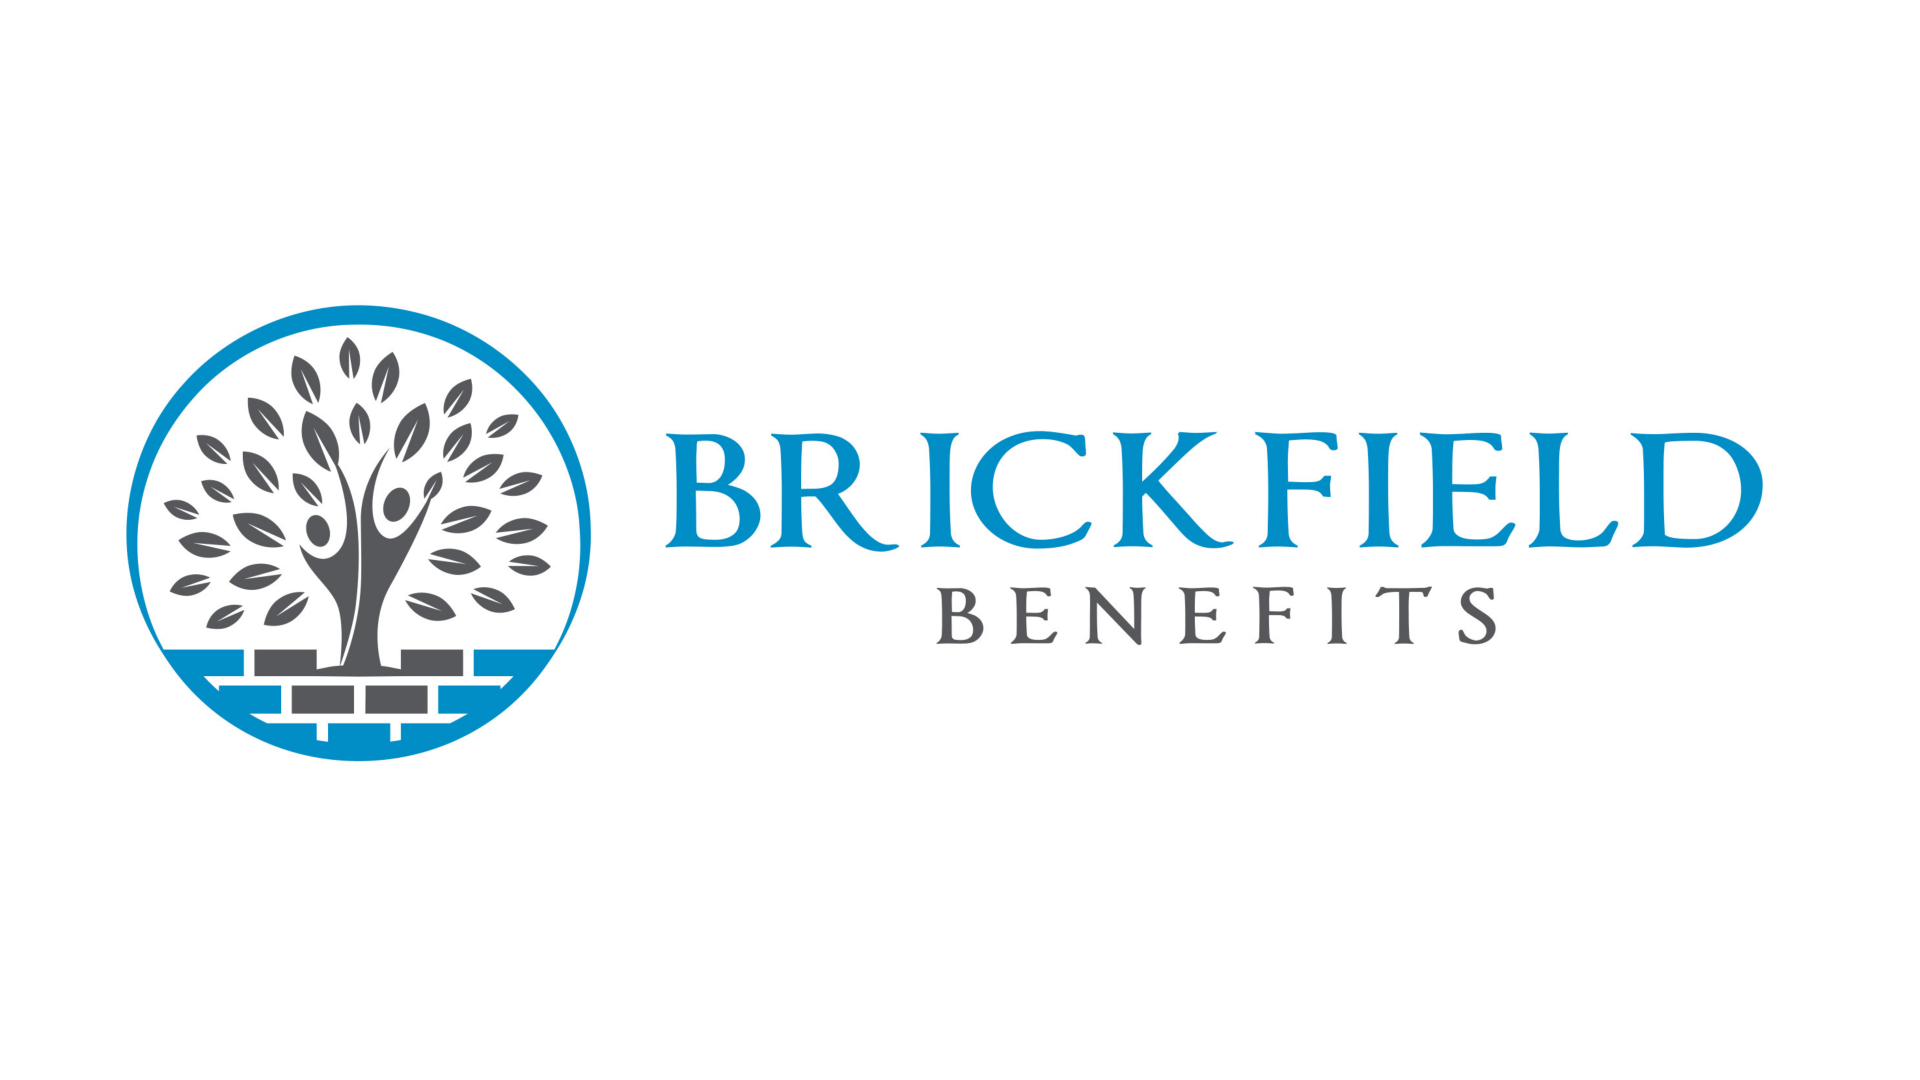 Brickfield Benefits